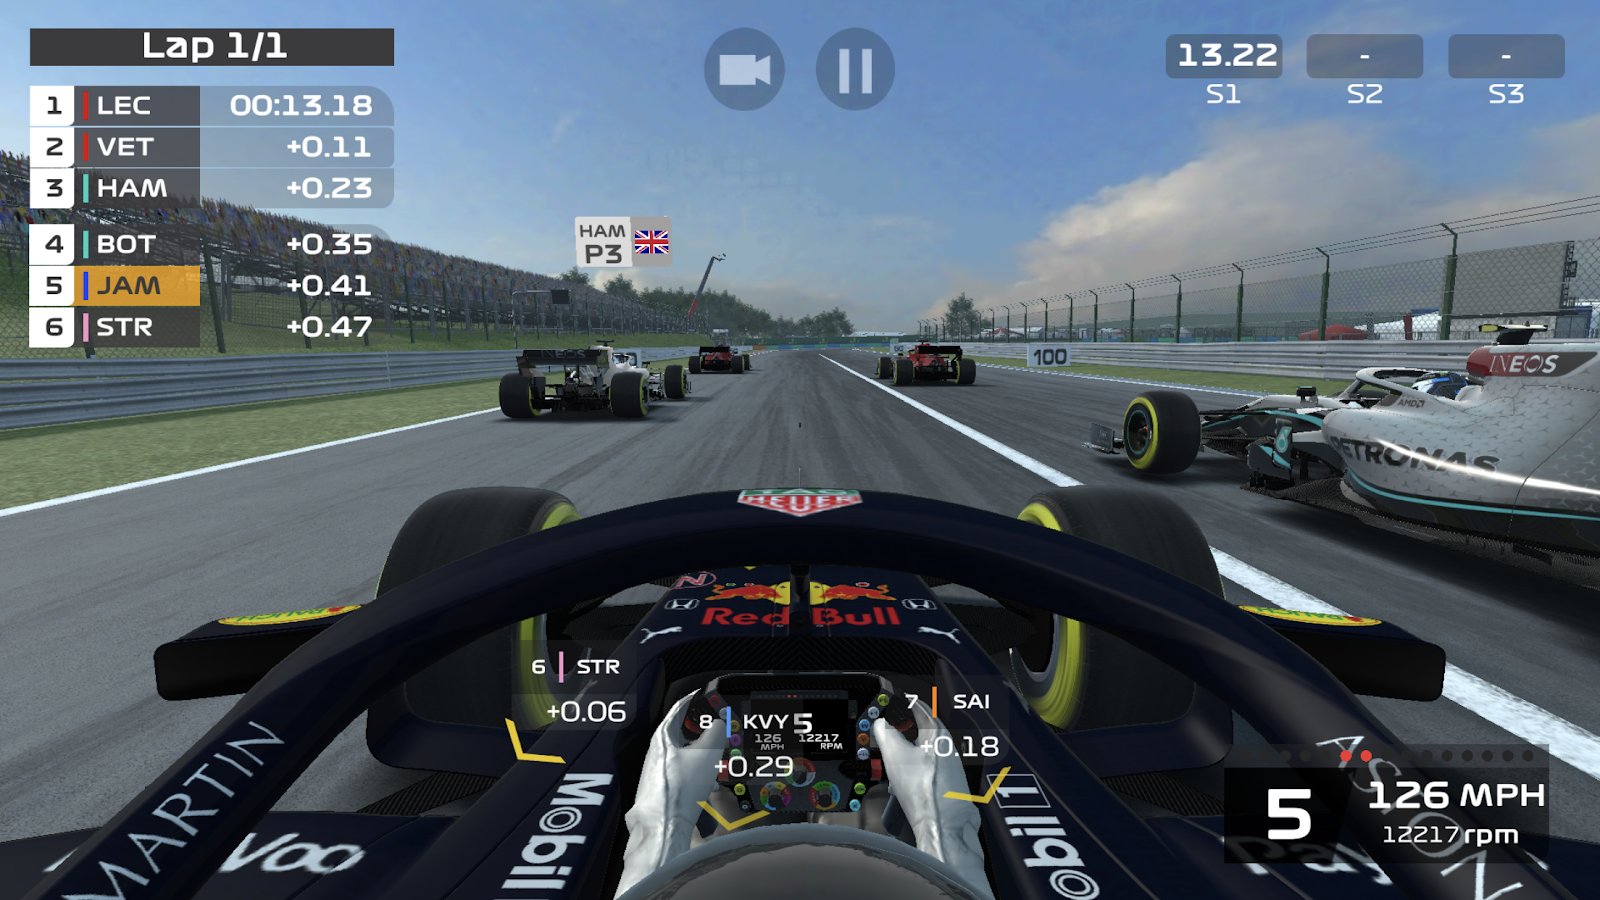 Racing limits 2. F1 mobile Racing. F1 на андроид. Гонки 2021 на андроид лучшие. Ф1 игра для андроид.